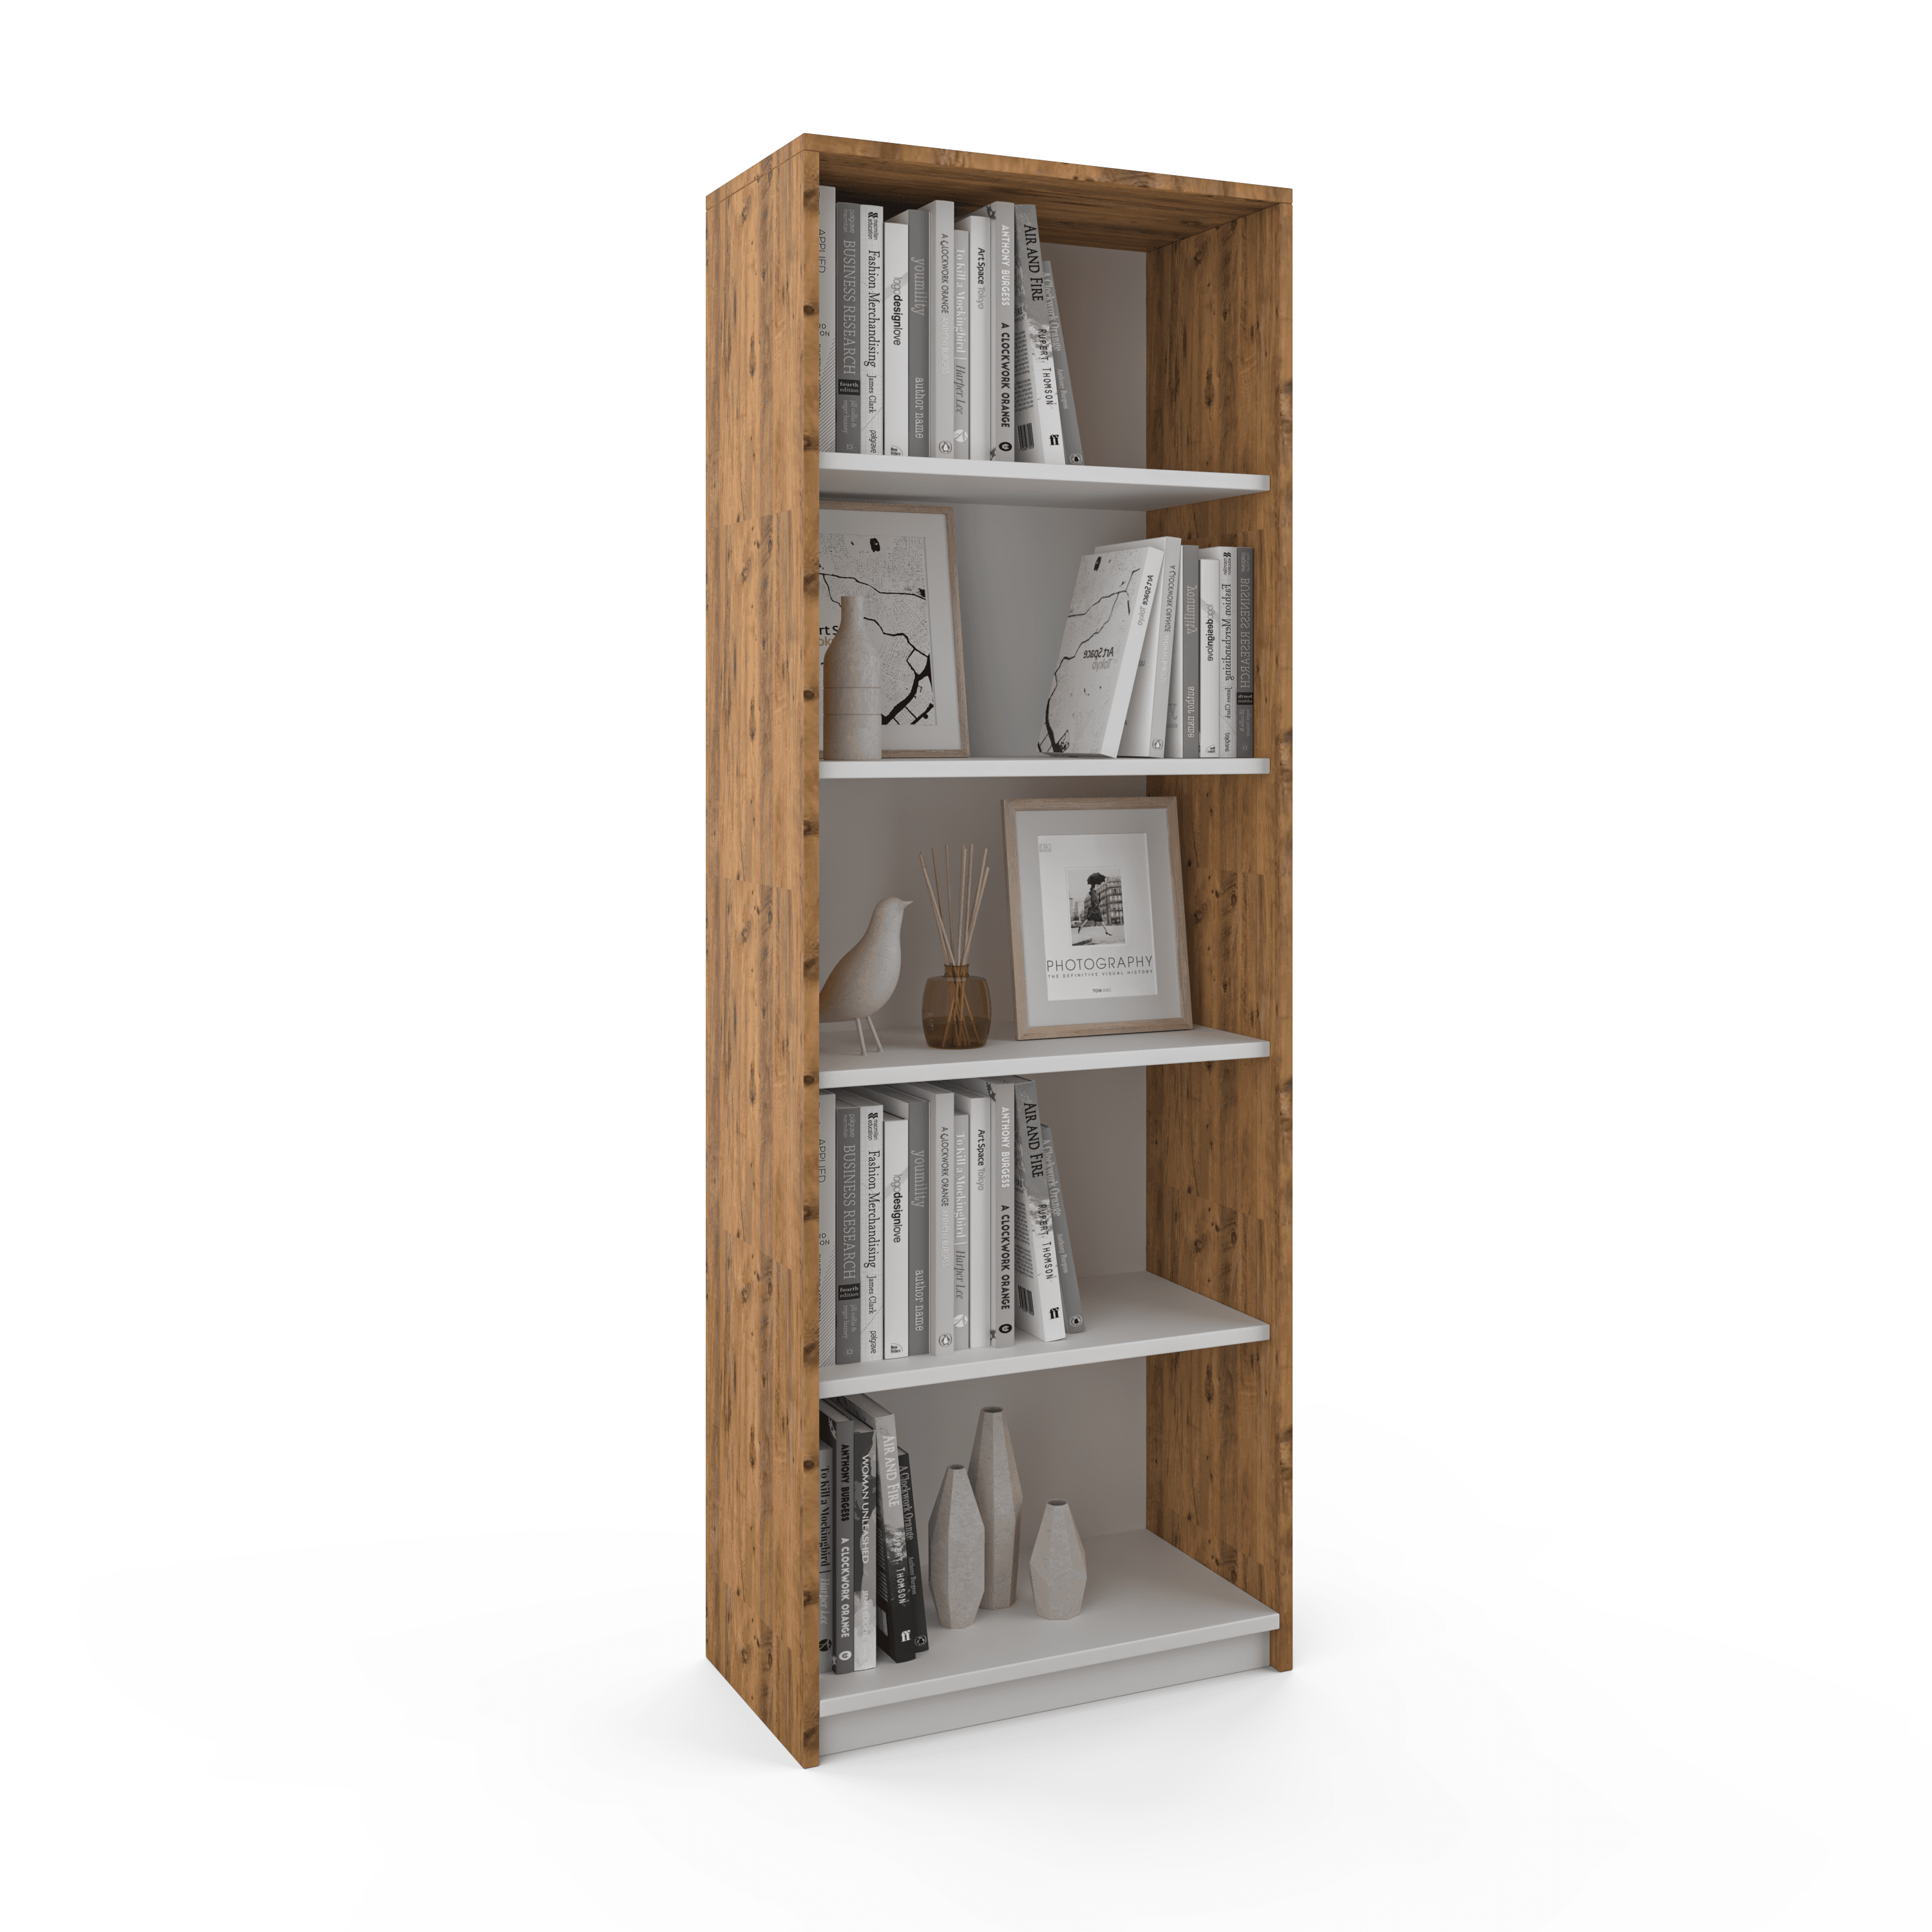 Vera Bookshelf - Atlantic Pine Color - White